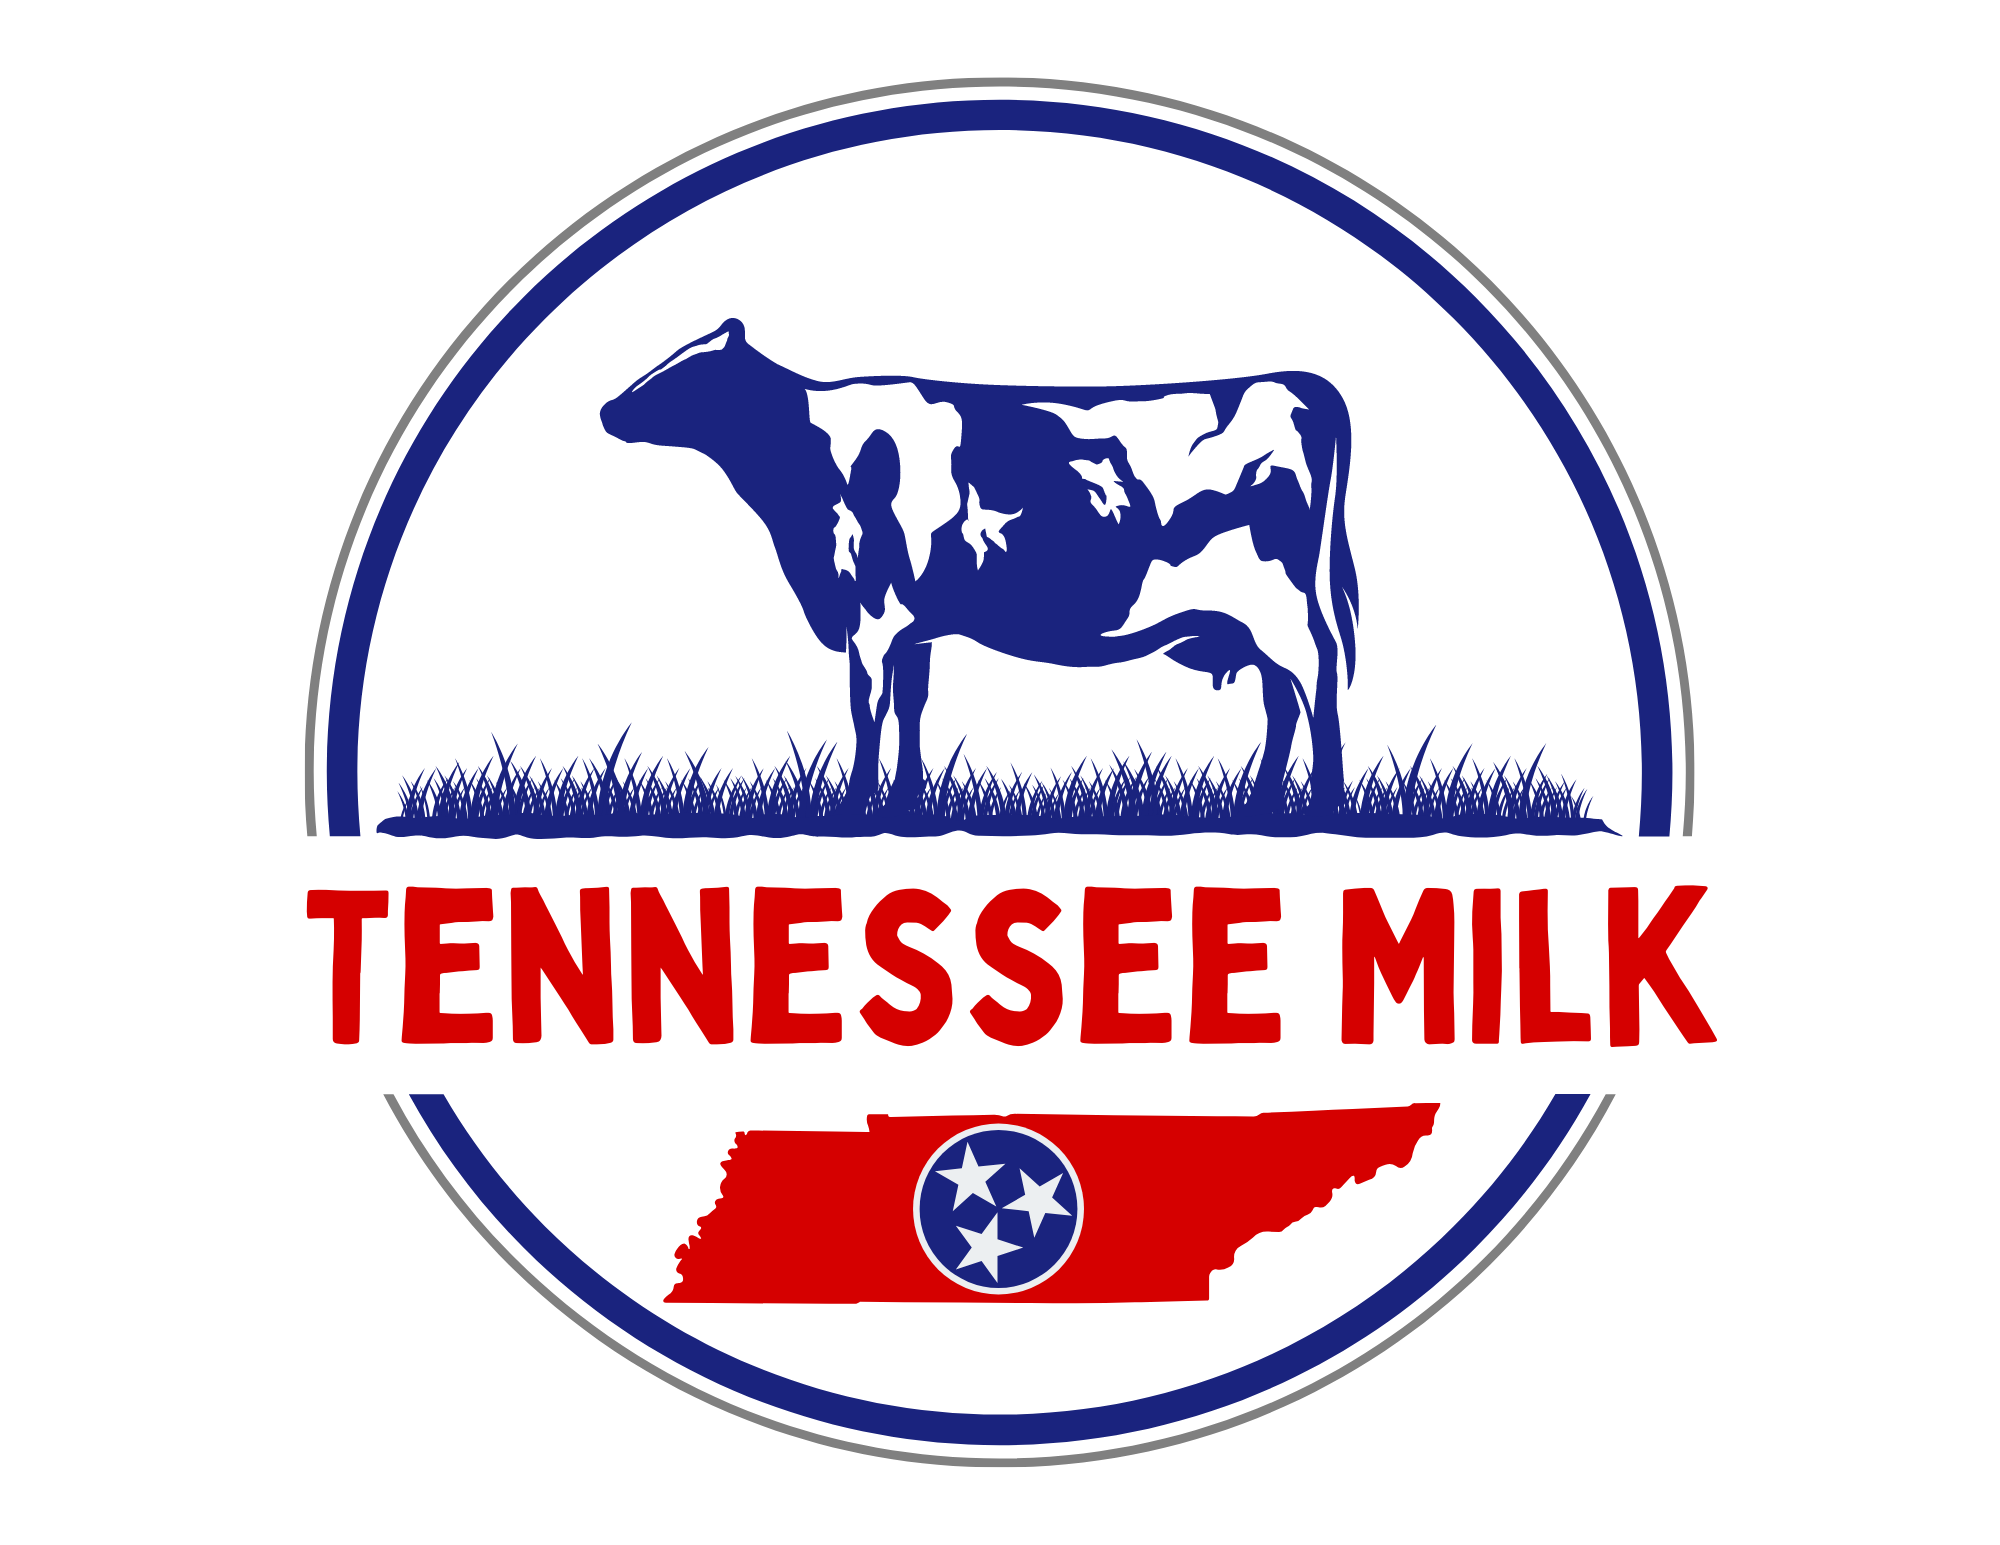 Tennessee Milk Logo Design Winner Announced